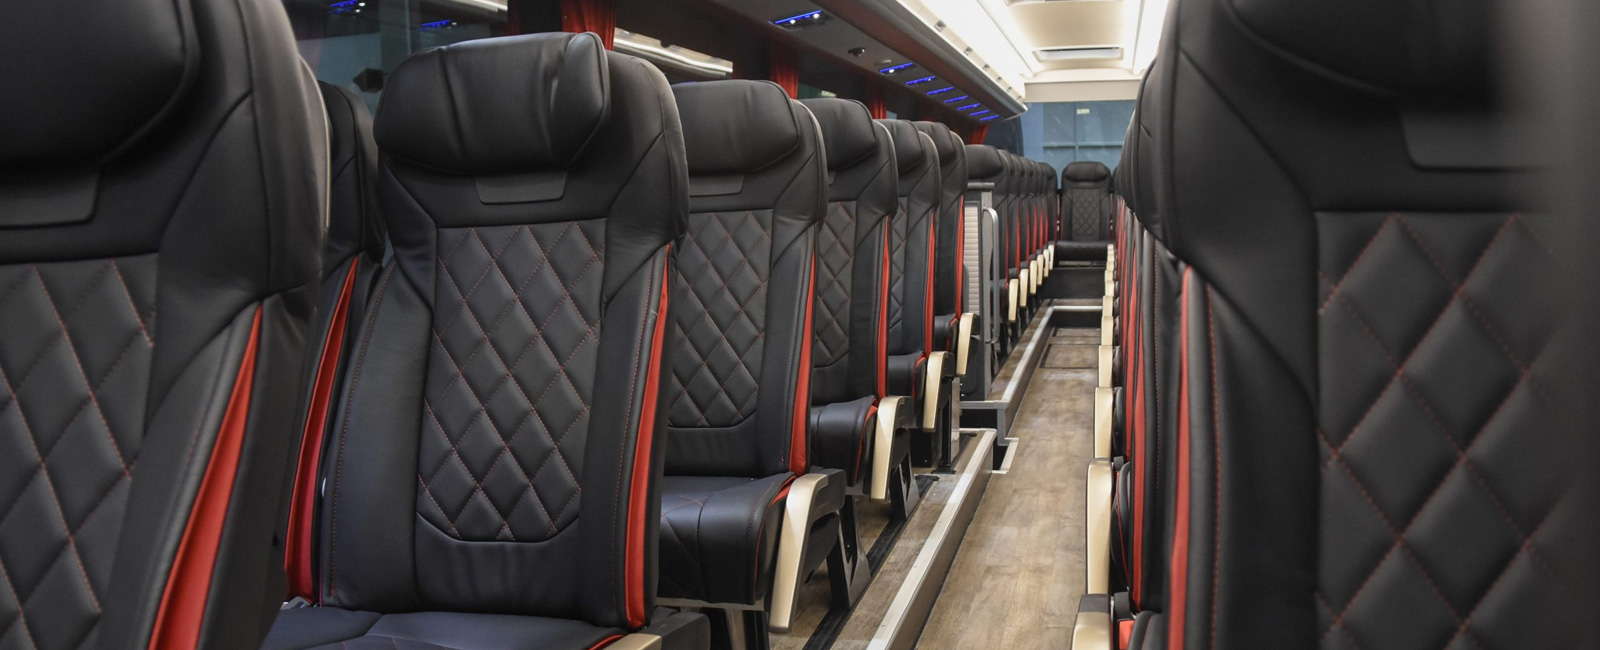 Vanhool Bus Seat Covers